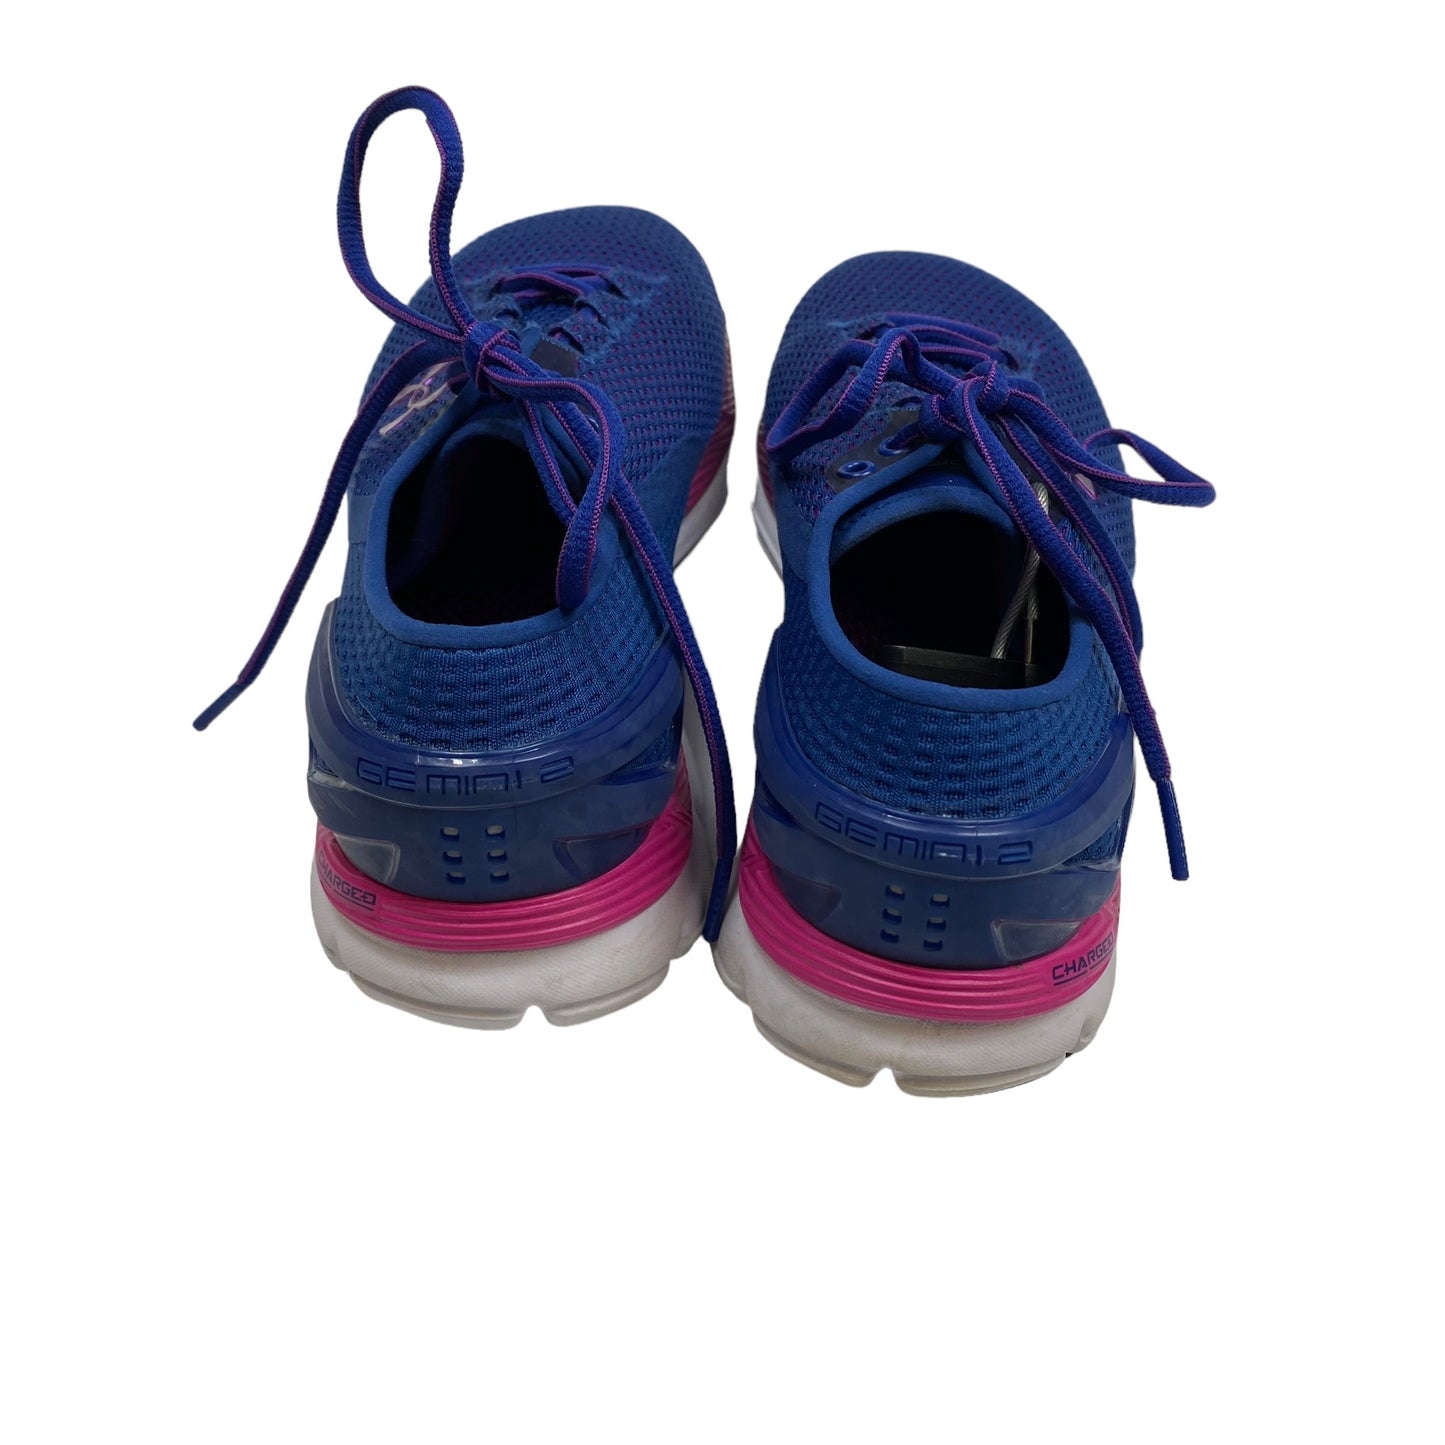 Blue Shoes Athletic Under Armour, Size 9